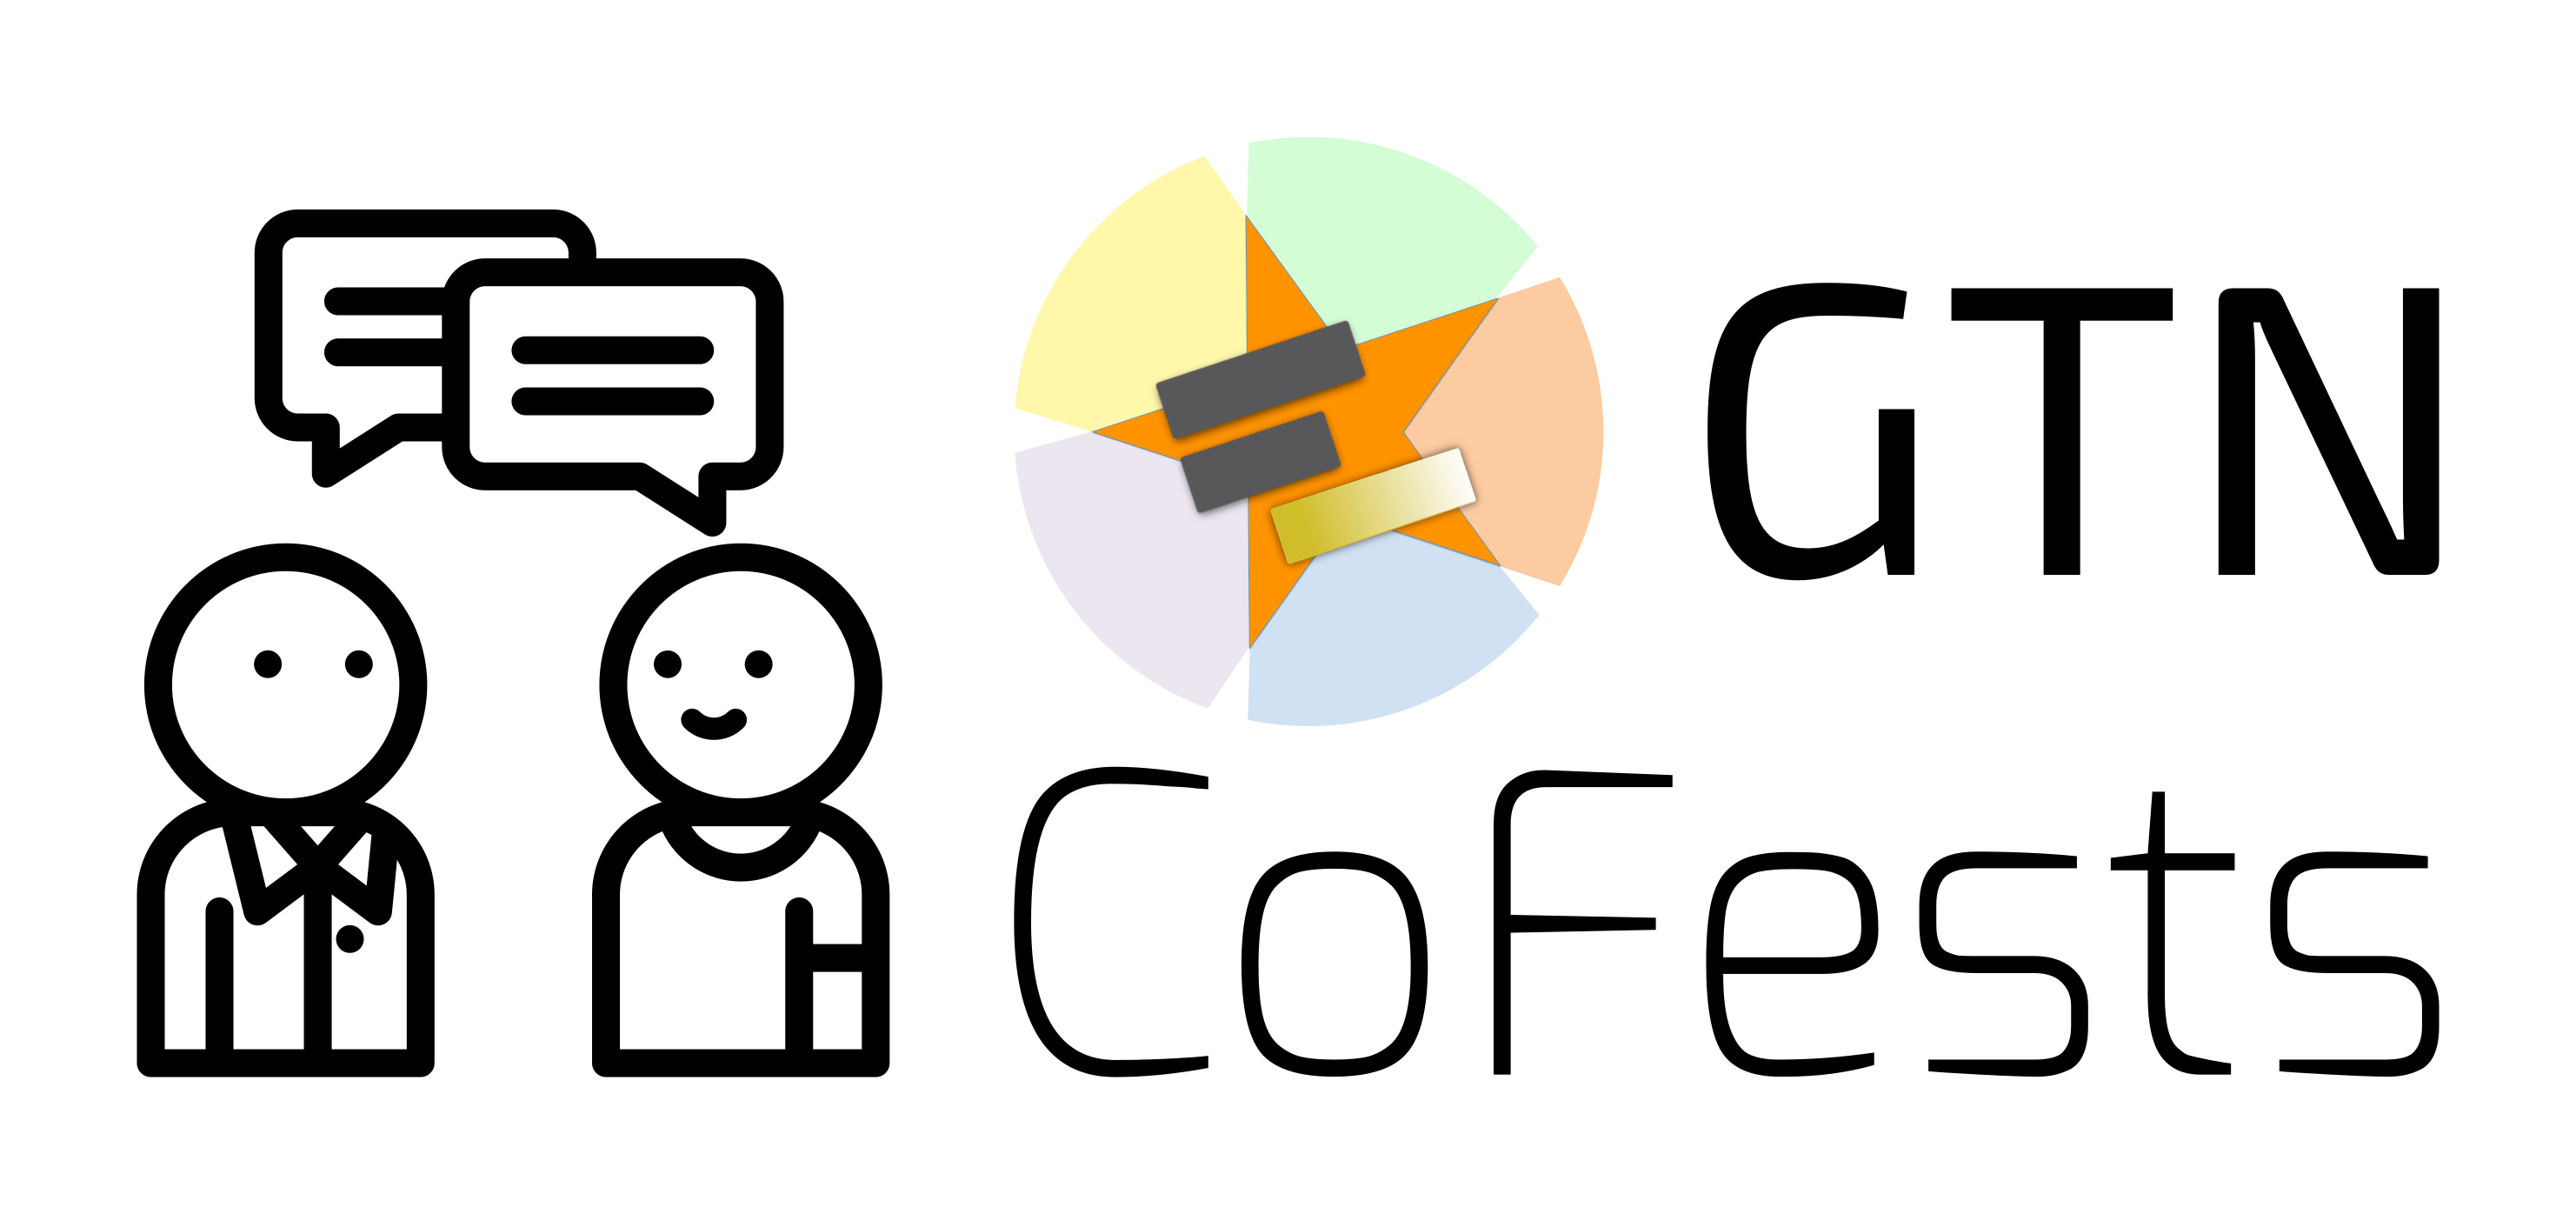 GTN cofest logo